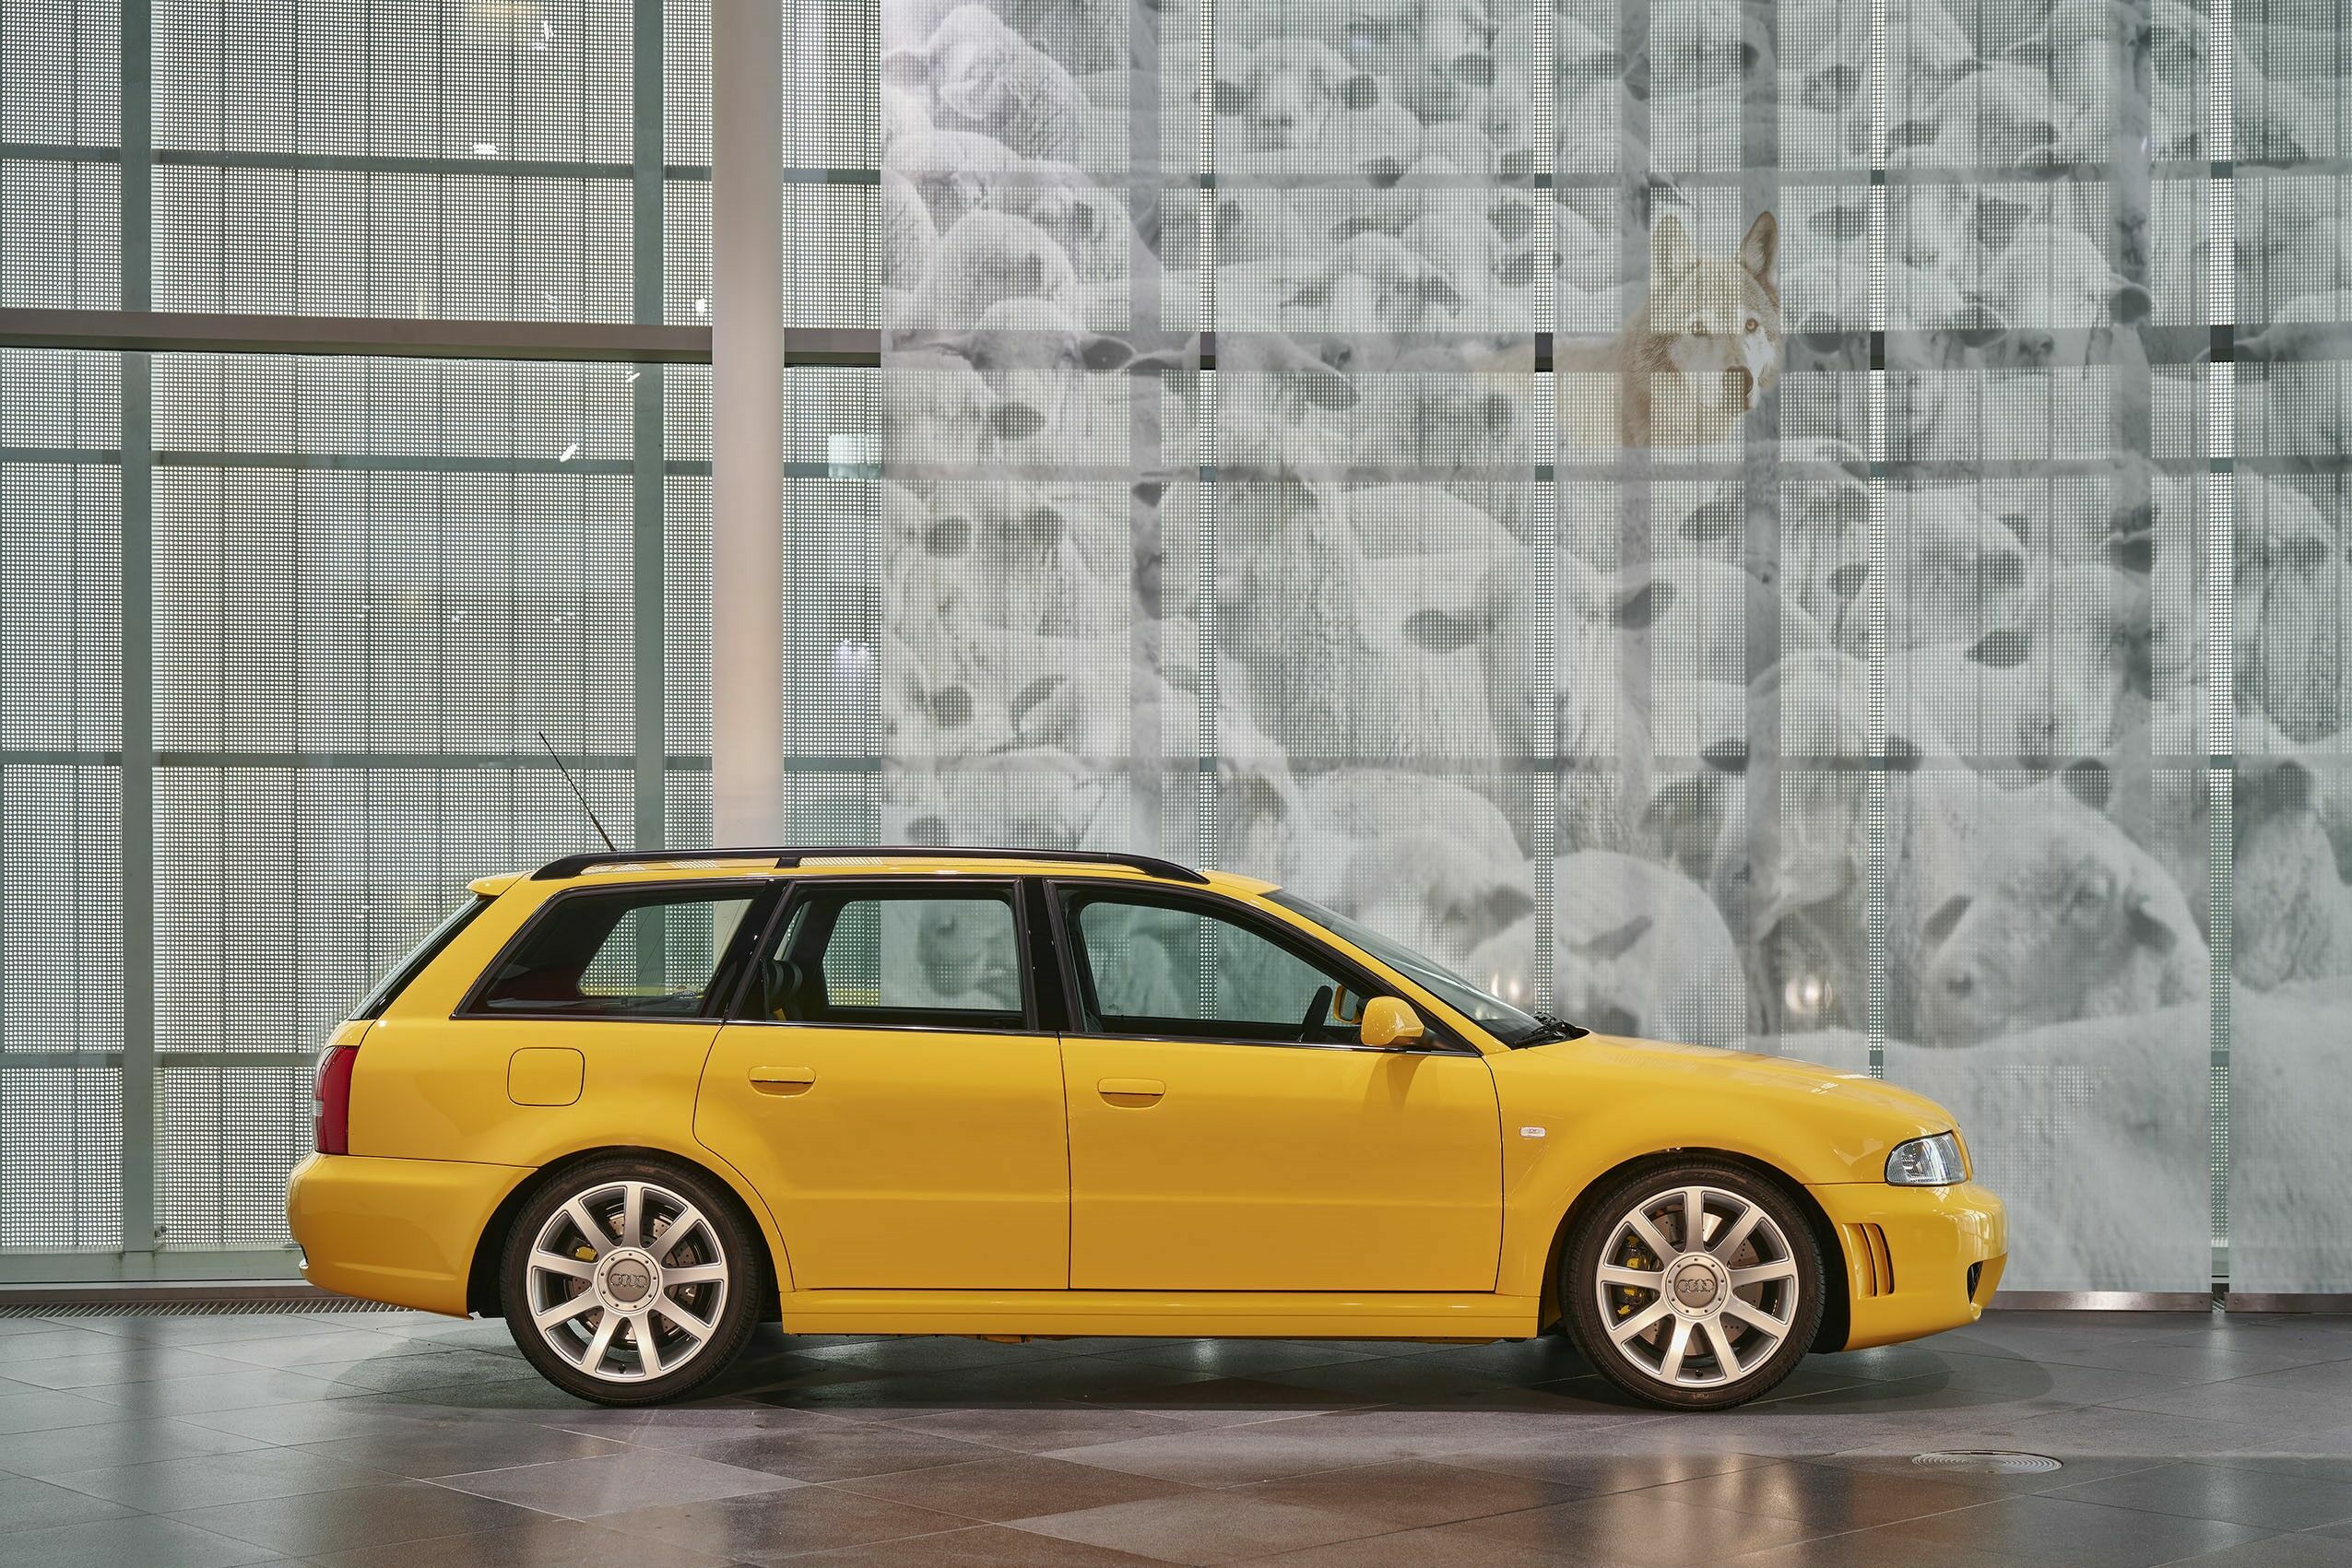 Audi museum mobile celebrates its 20th birthday